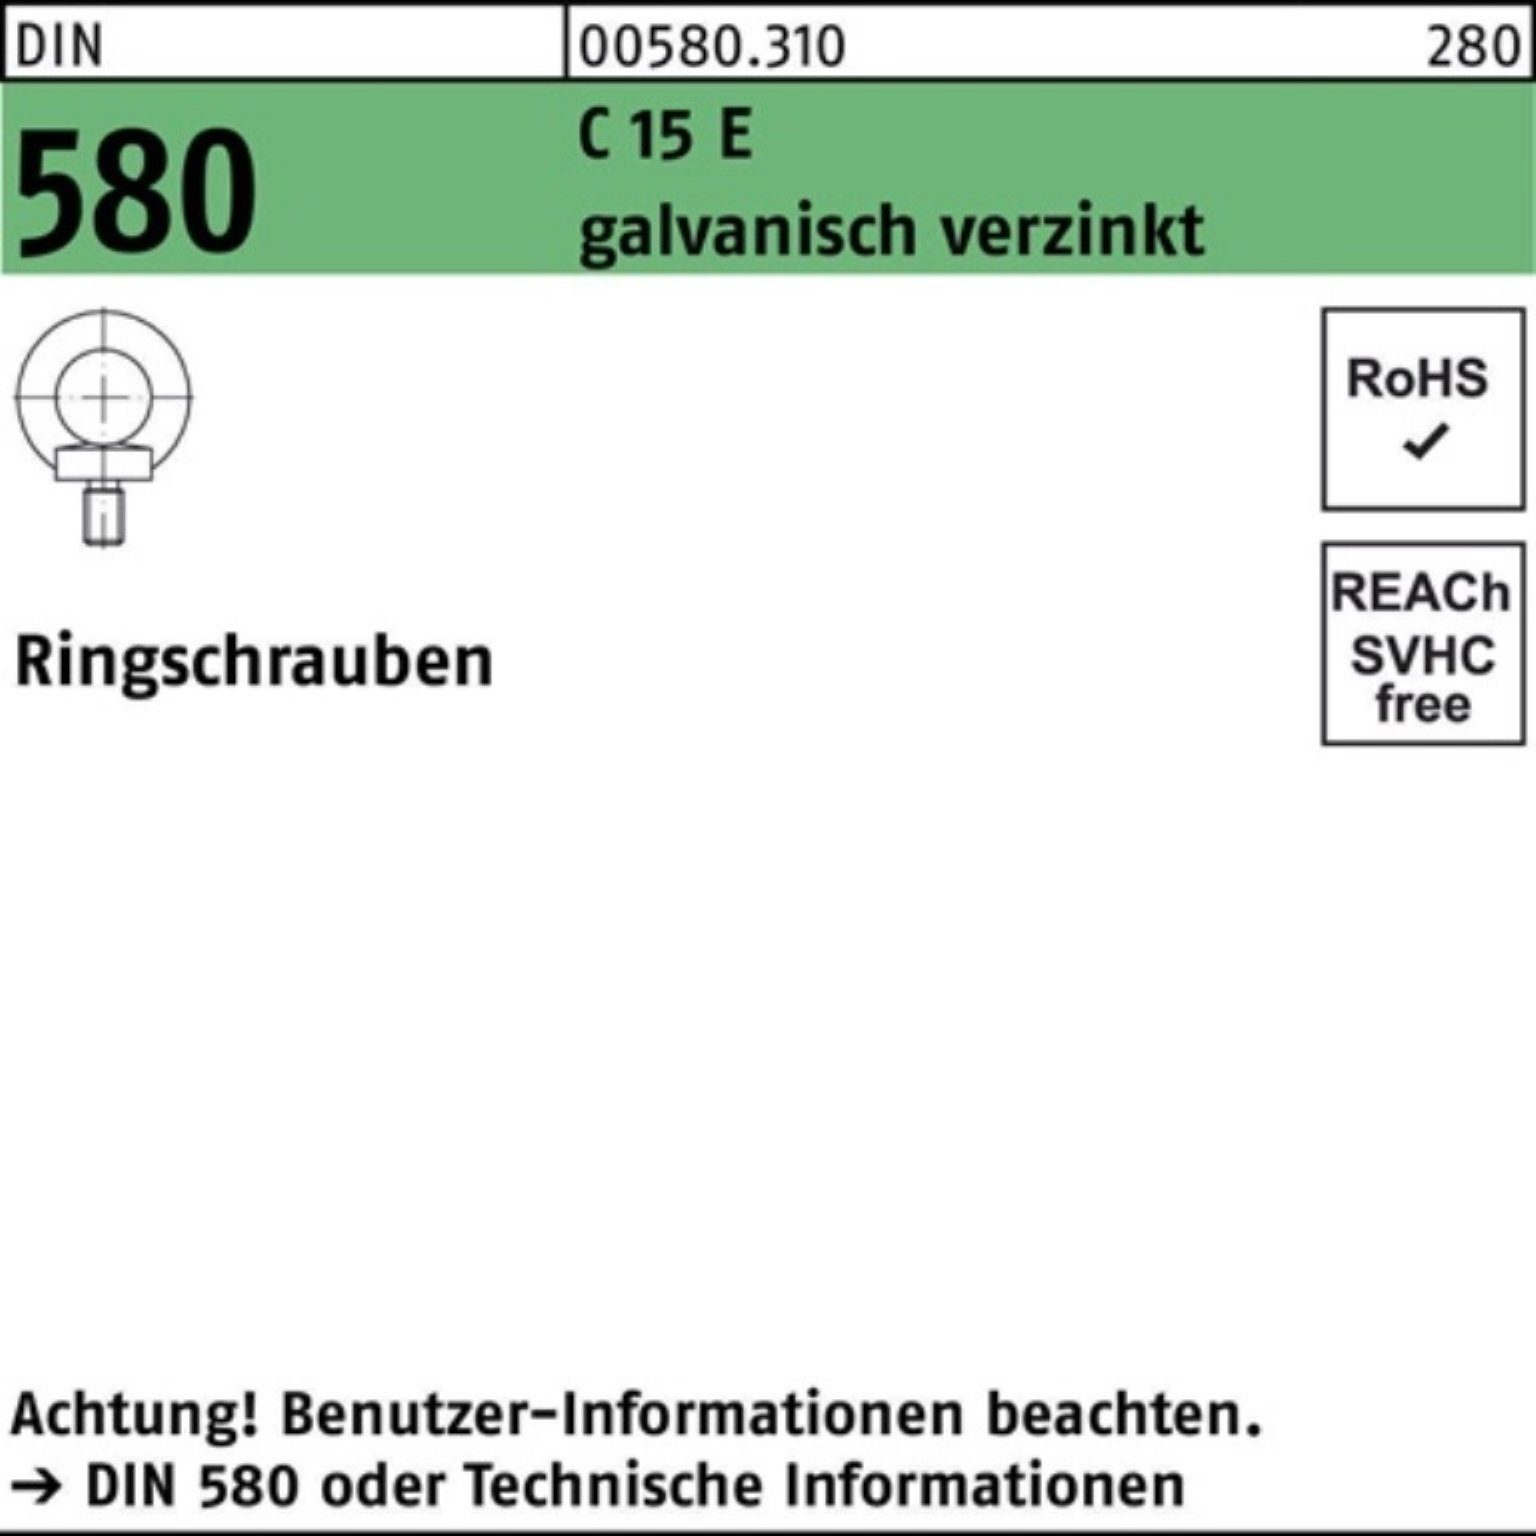 Reyher Schraube 100er Pack Ringschraube DIN 580 M27 C 15 E galv.verz. 1 Stück DIN 580 | Schrauben